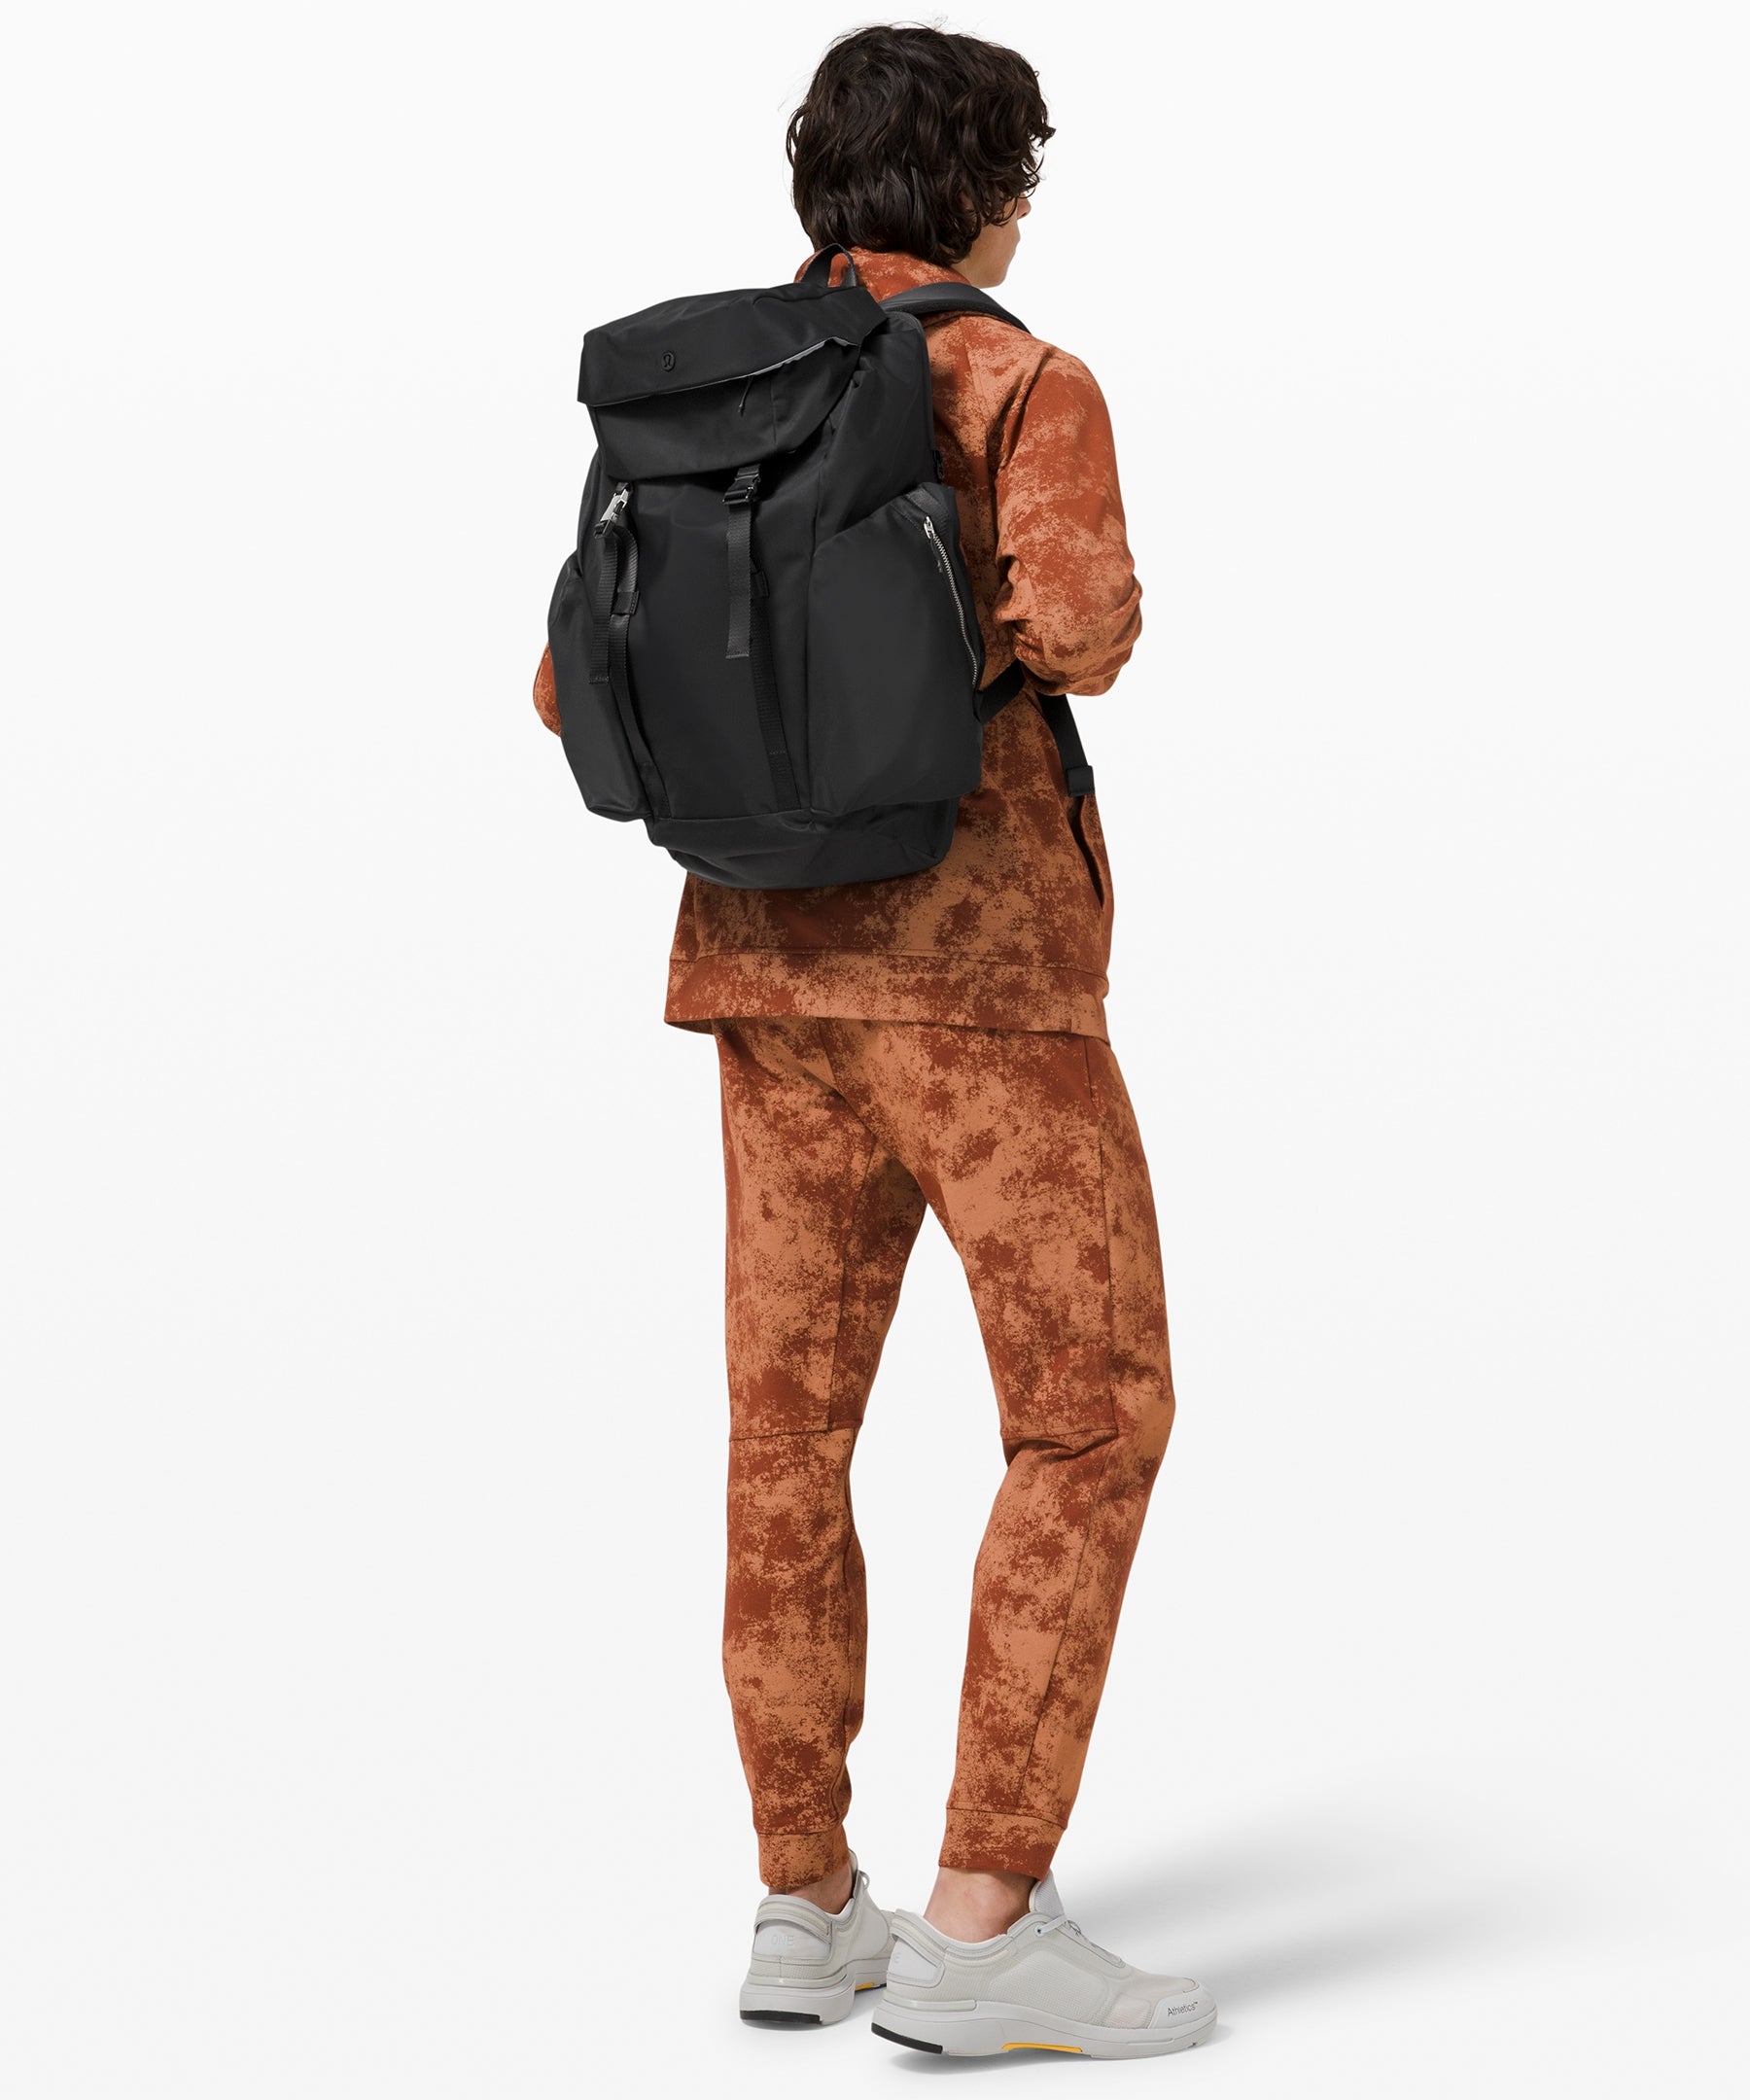 donker Frank twee weken Cheap >lululemon urban nomad backpack big sale - OFF 74%